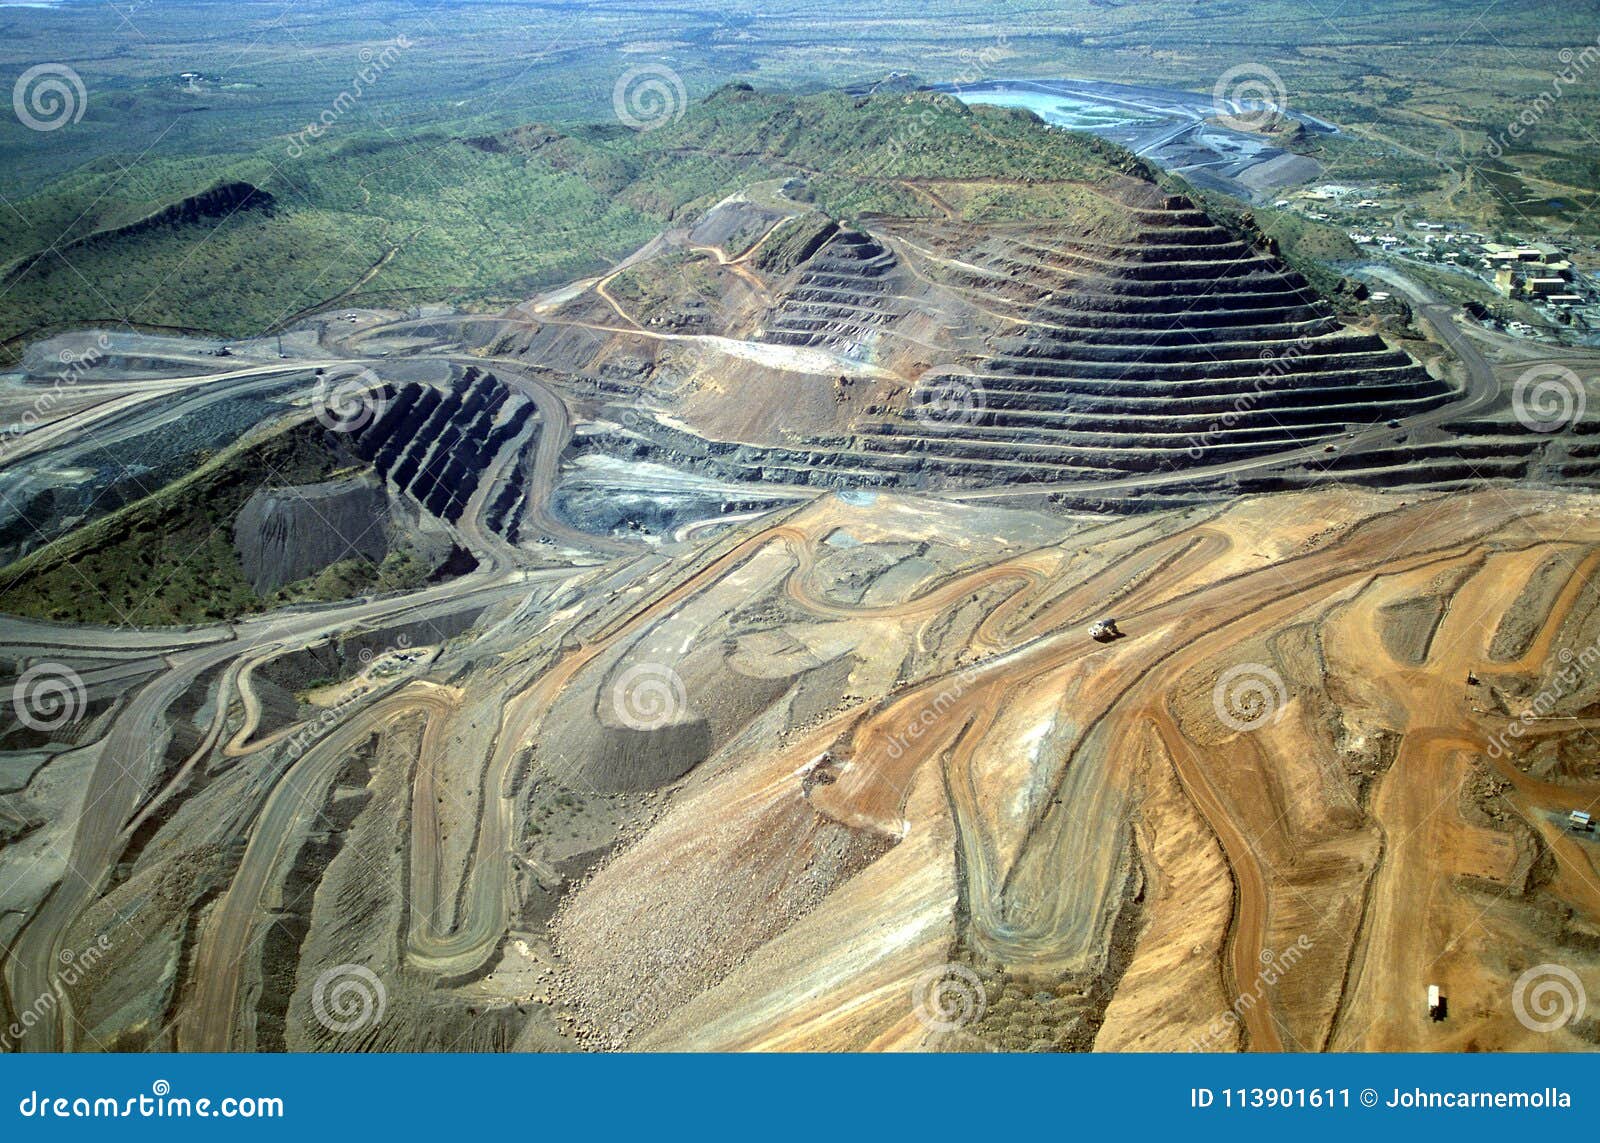 Diamond Mine In The Kimberley Region Of Western Australia Stock Image Image Of Australia River